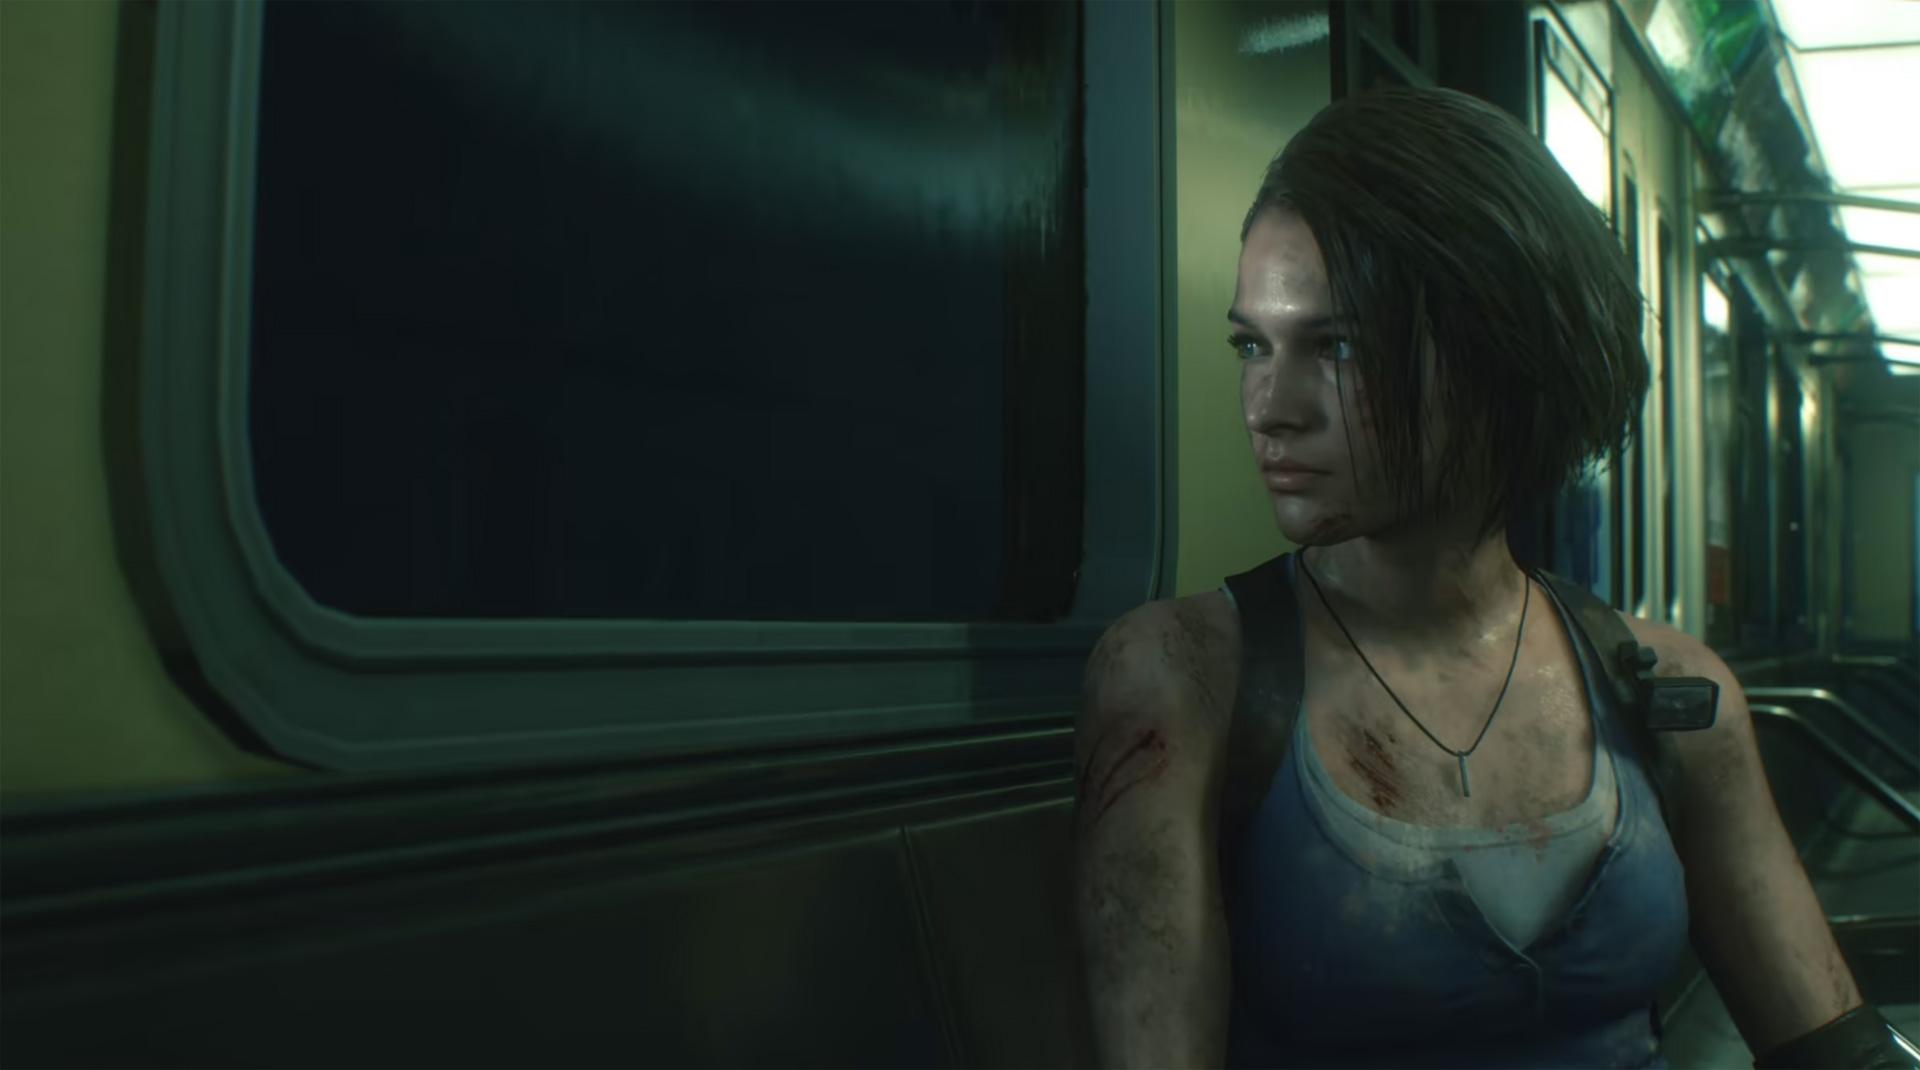 Nadchodzi aktualizacja remake’u Resident Evil 3